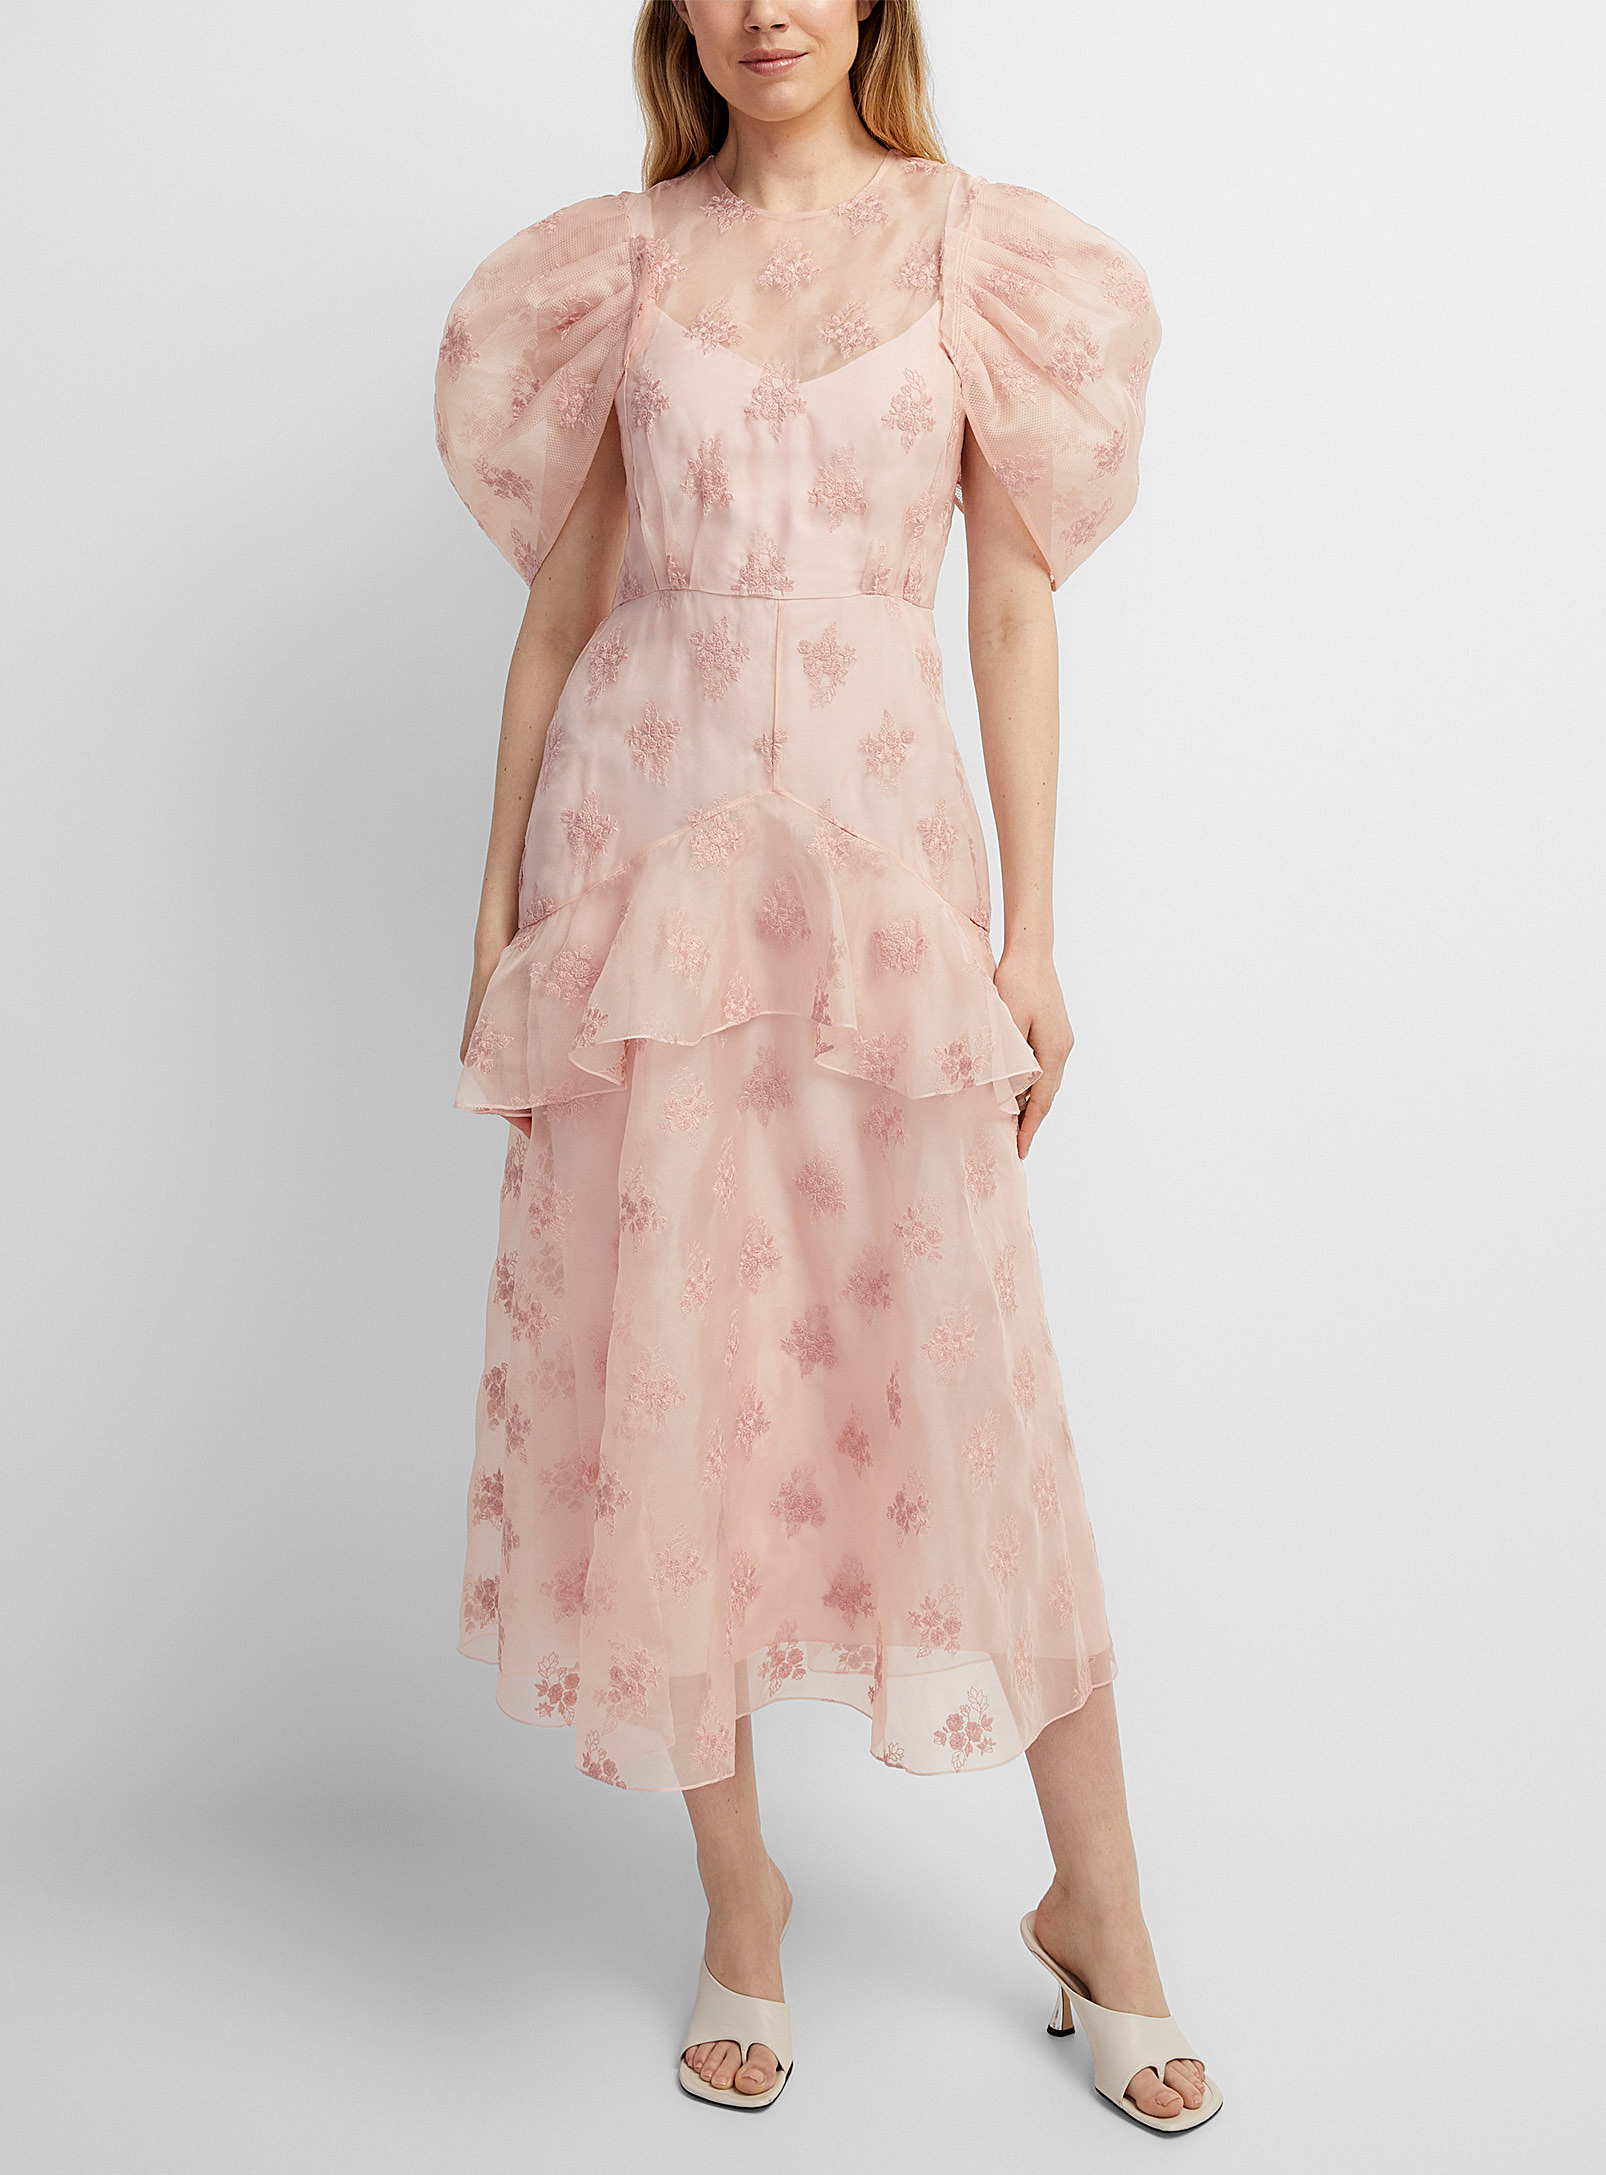 Erdem - La robe rose organza brodé